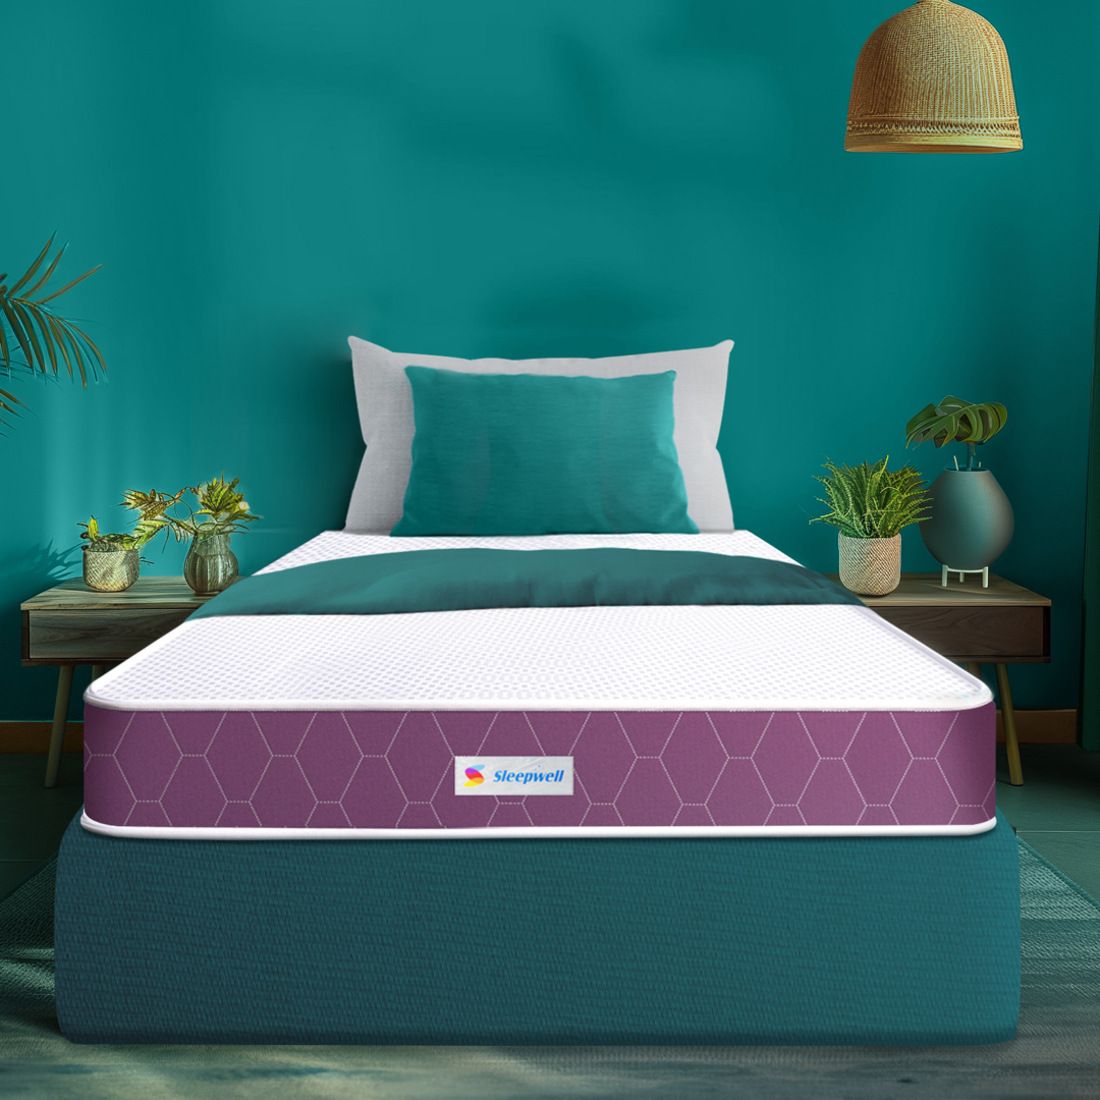 Sleepwell Ortho Mattress | Quilted | 8-inch Single Bed Size, Impressions Memory Foam, Medium Firm Mattress(Purple, 75x35X8)